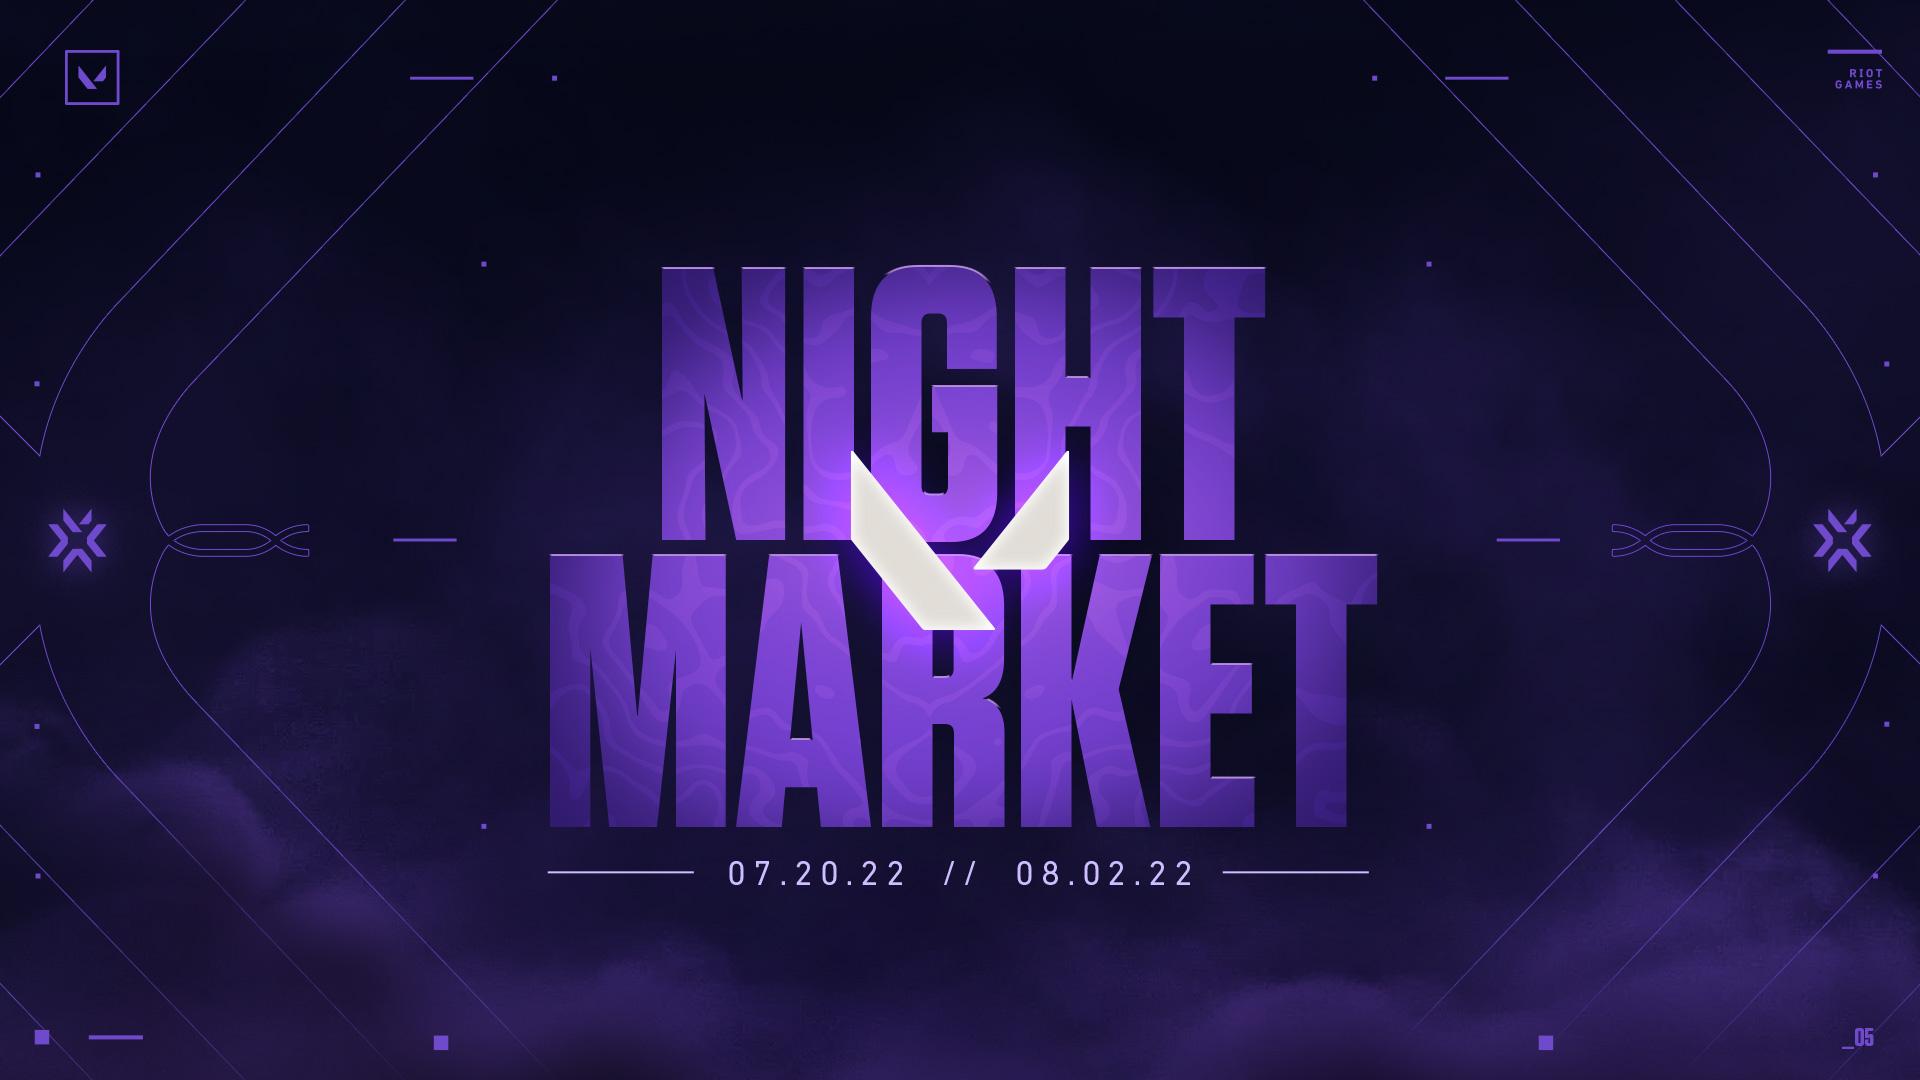 Valorant Night. Market return